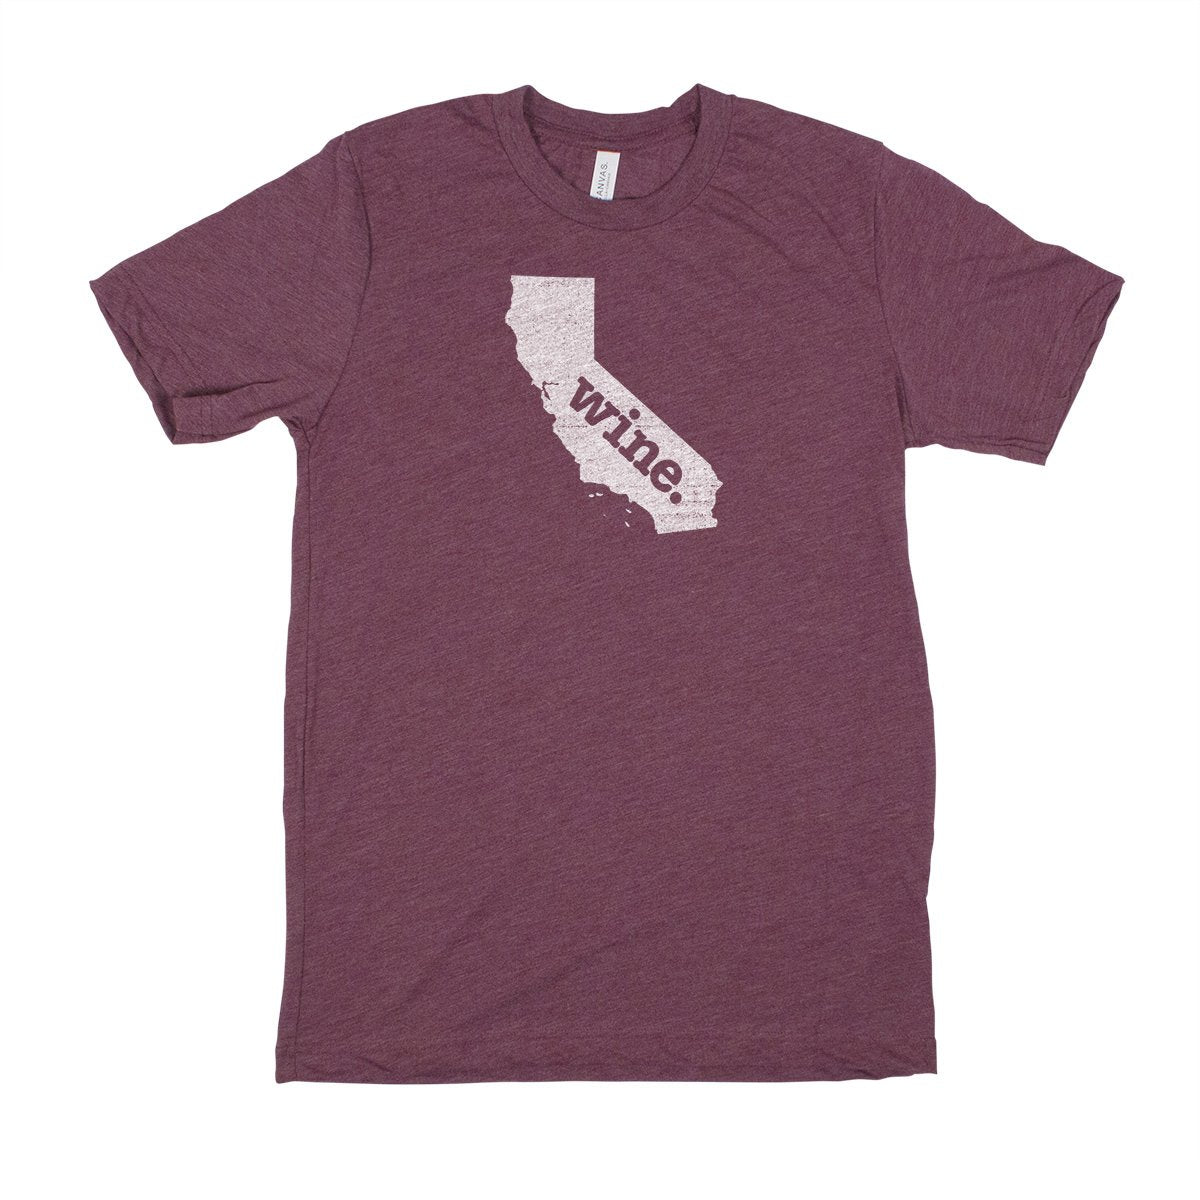 run. Men's Unisex T-Shirt - West Virginia